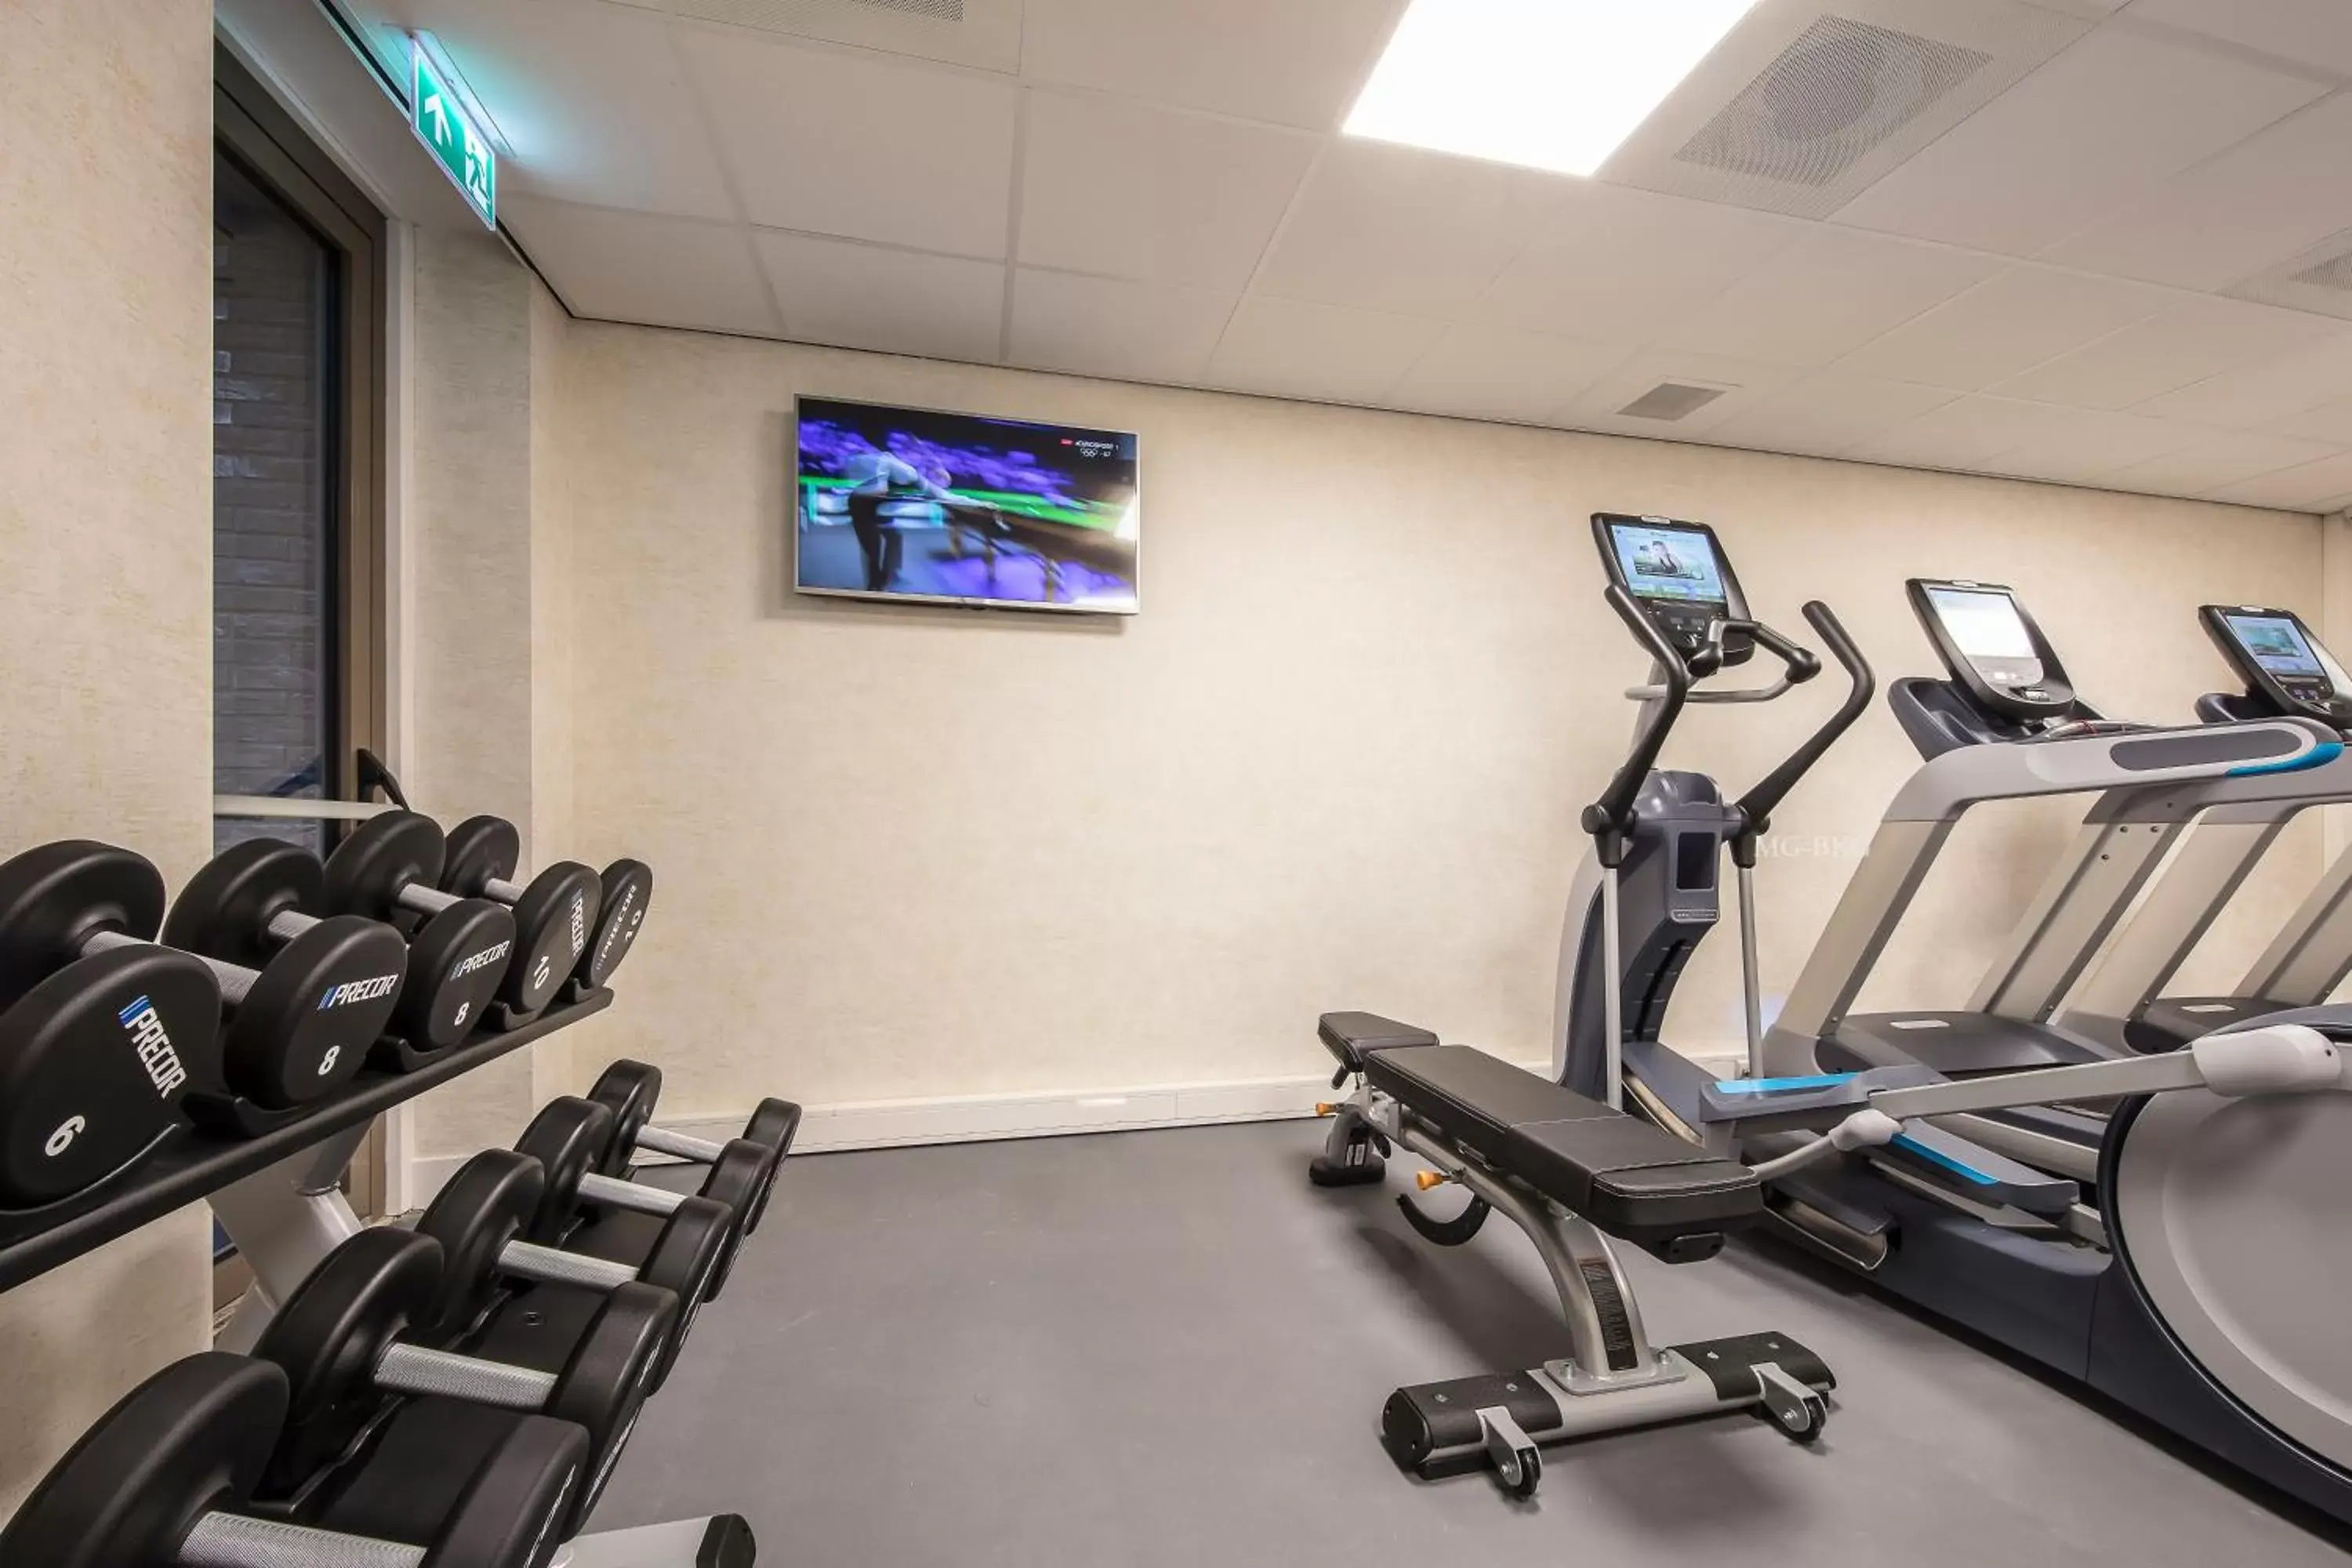 Fitness centre/facilities, Fitness Center/Facilities in Monet Garden Hotel Amsterdam